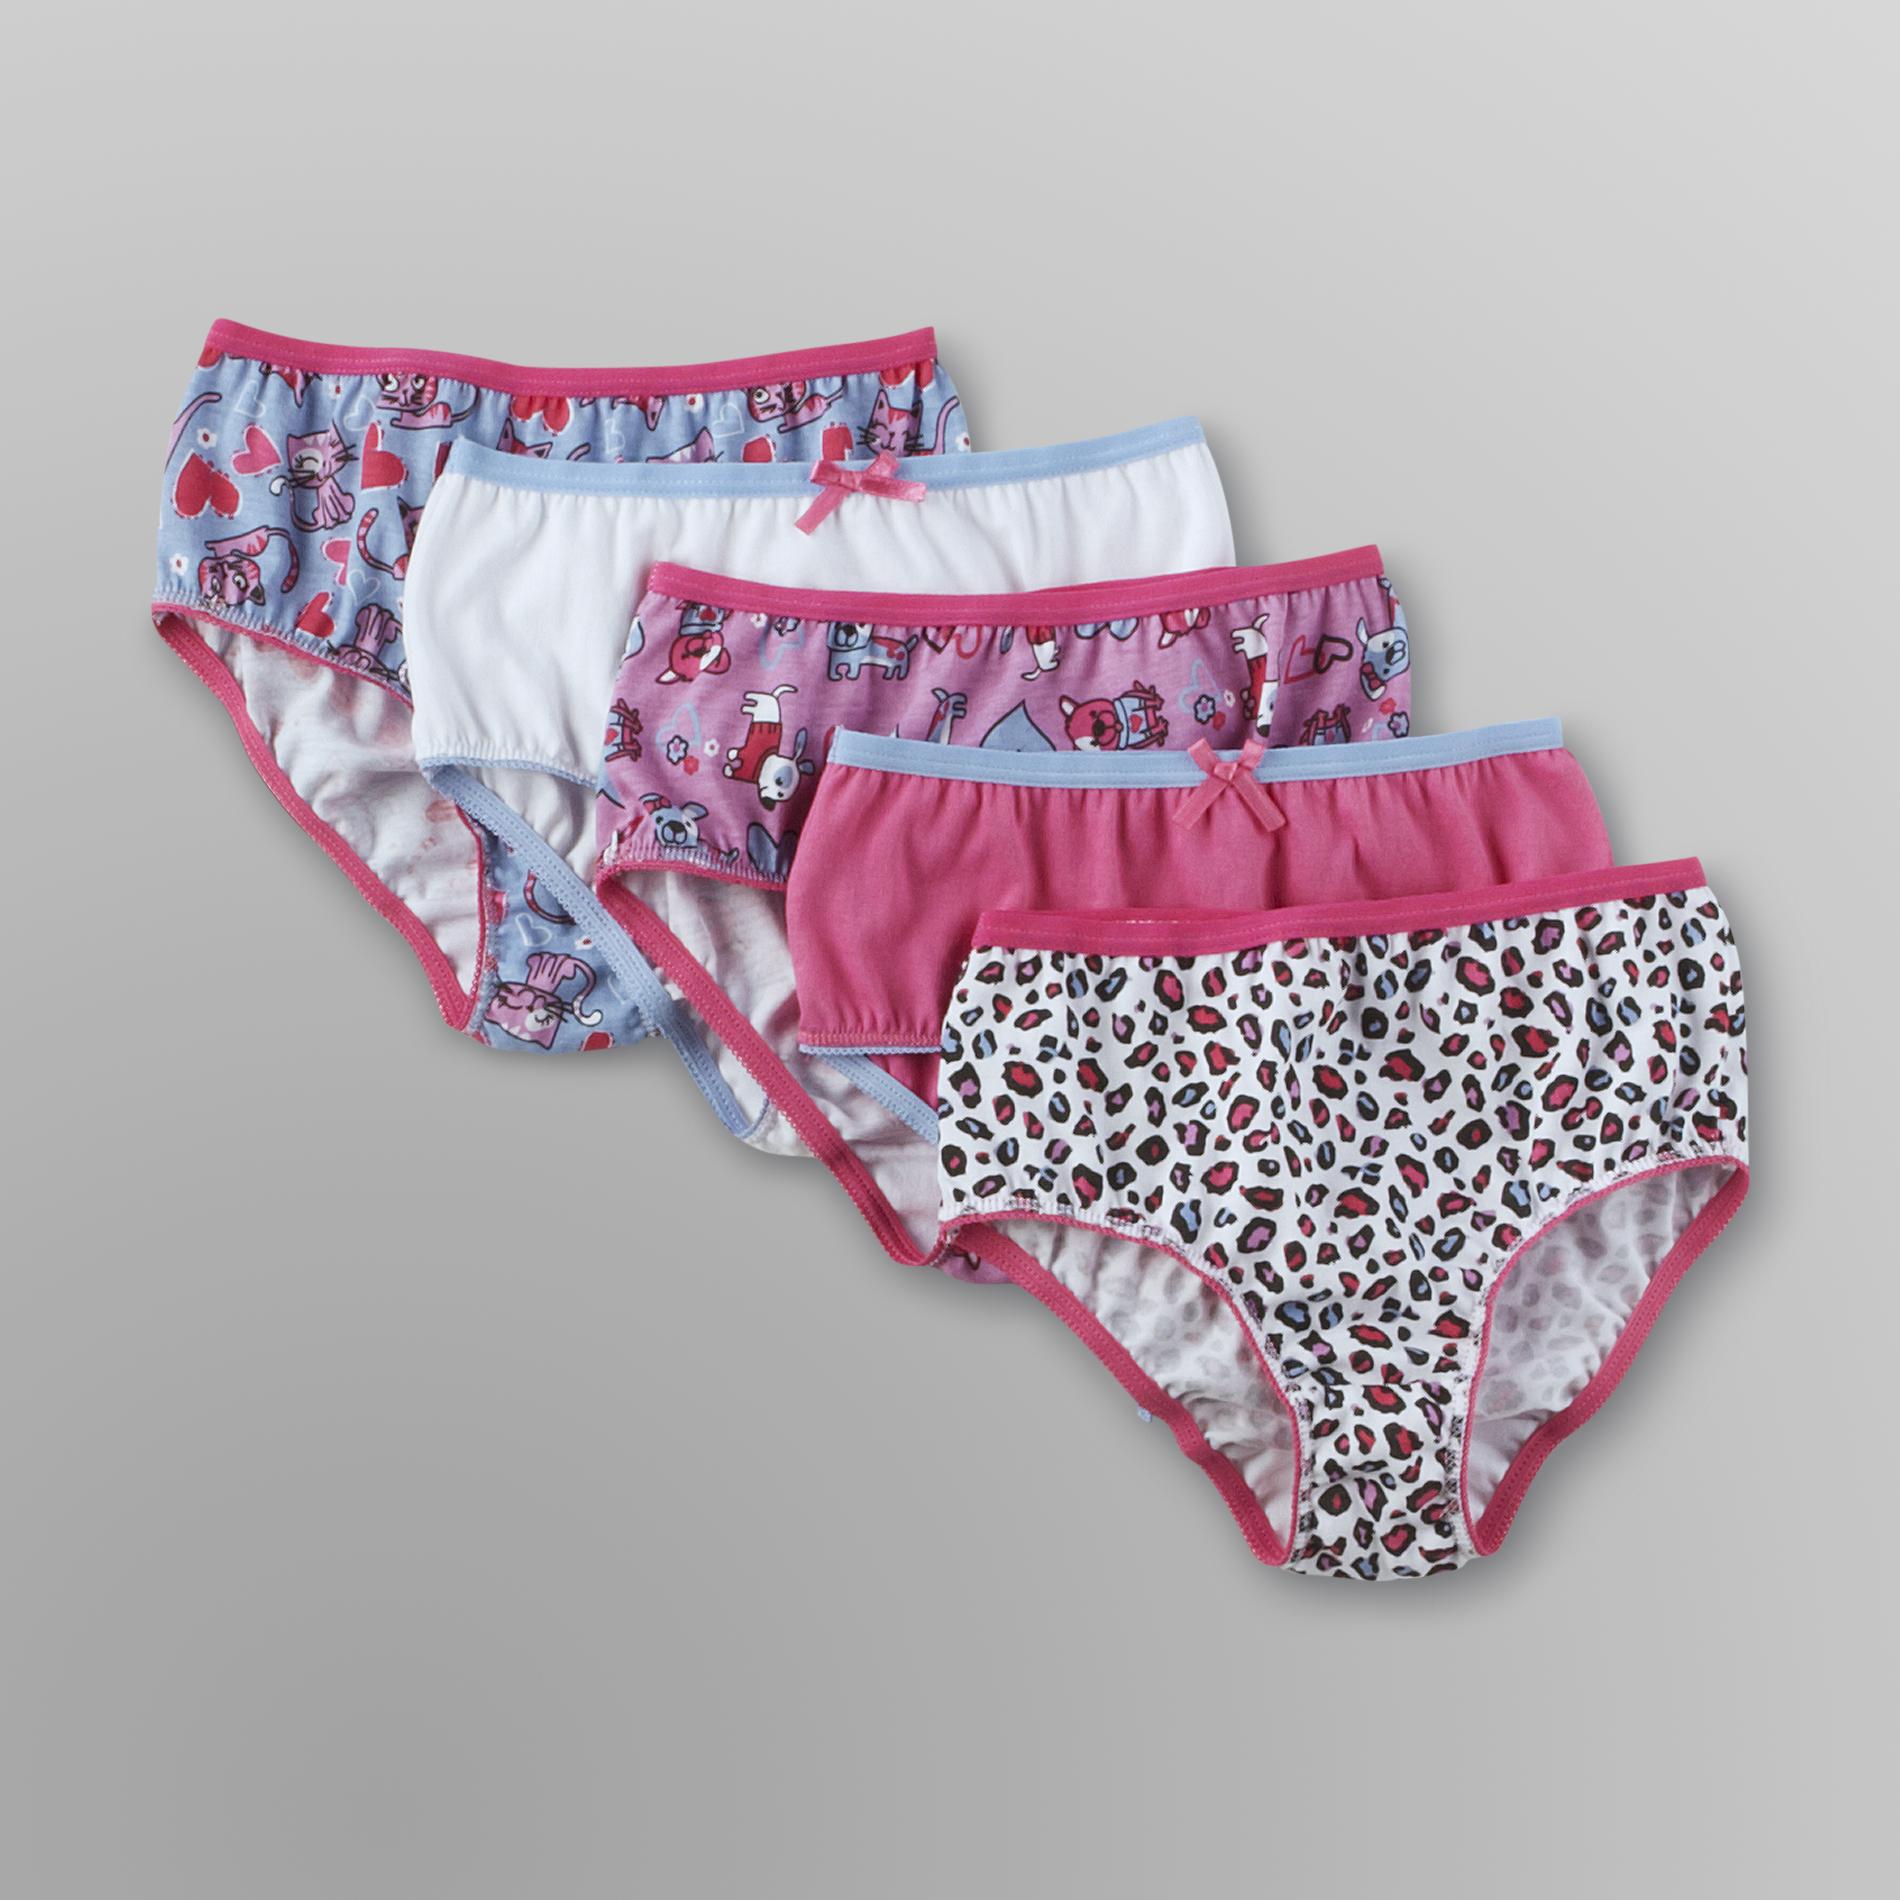 Joe Boxer 5-Pack Toddler Girl's Cotton Panties